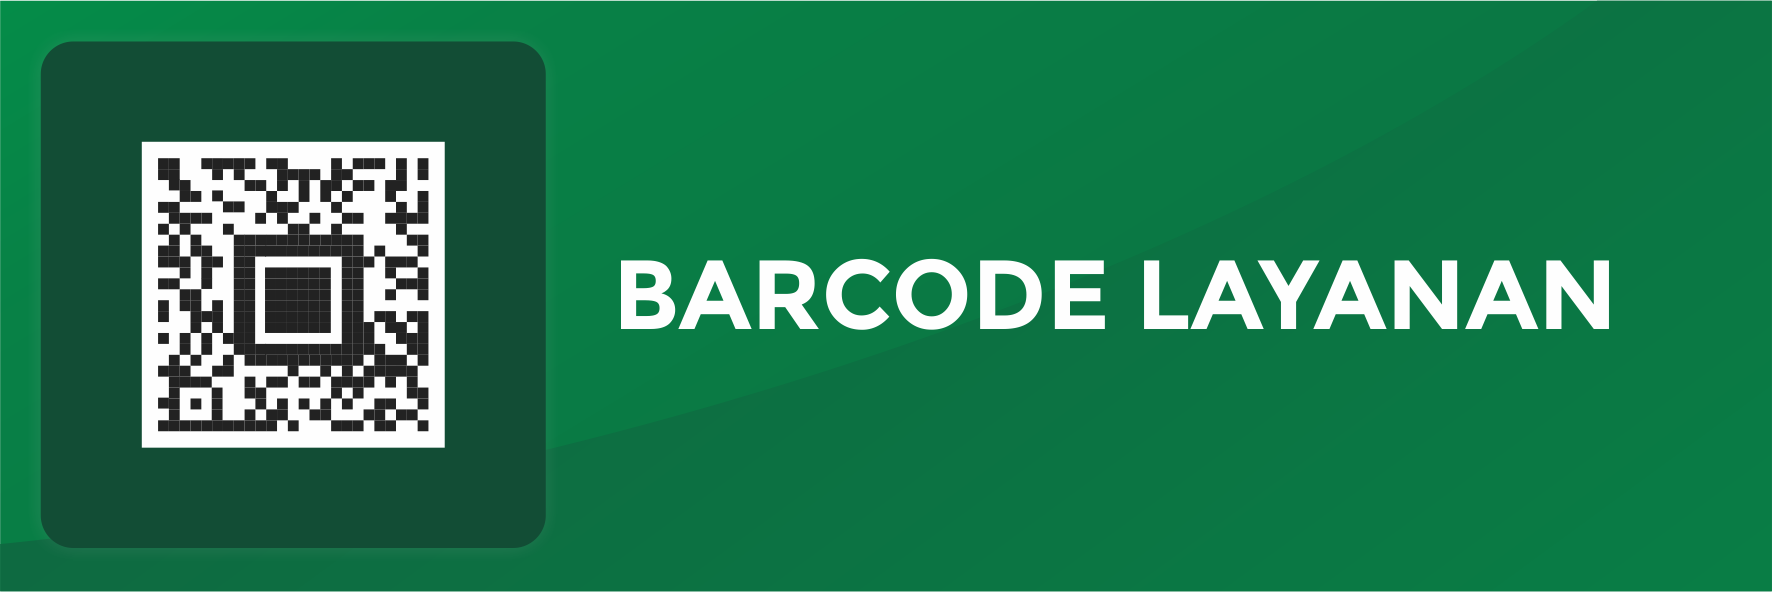 Barcode Layanan